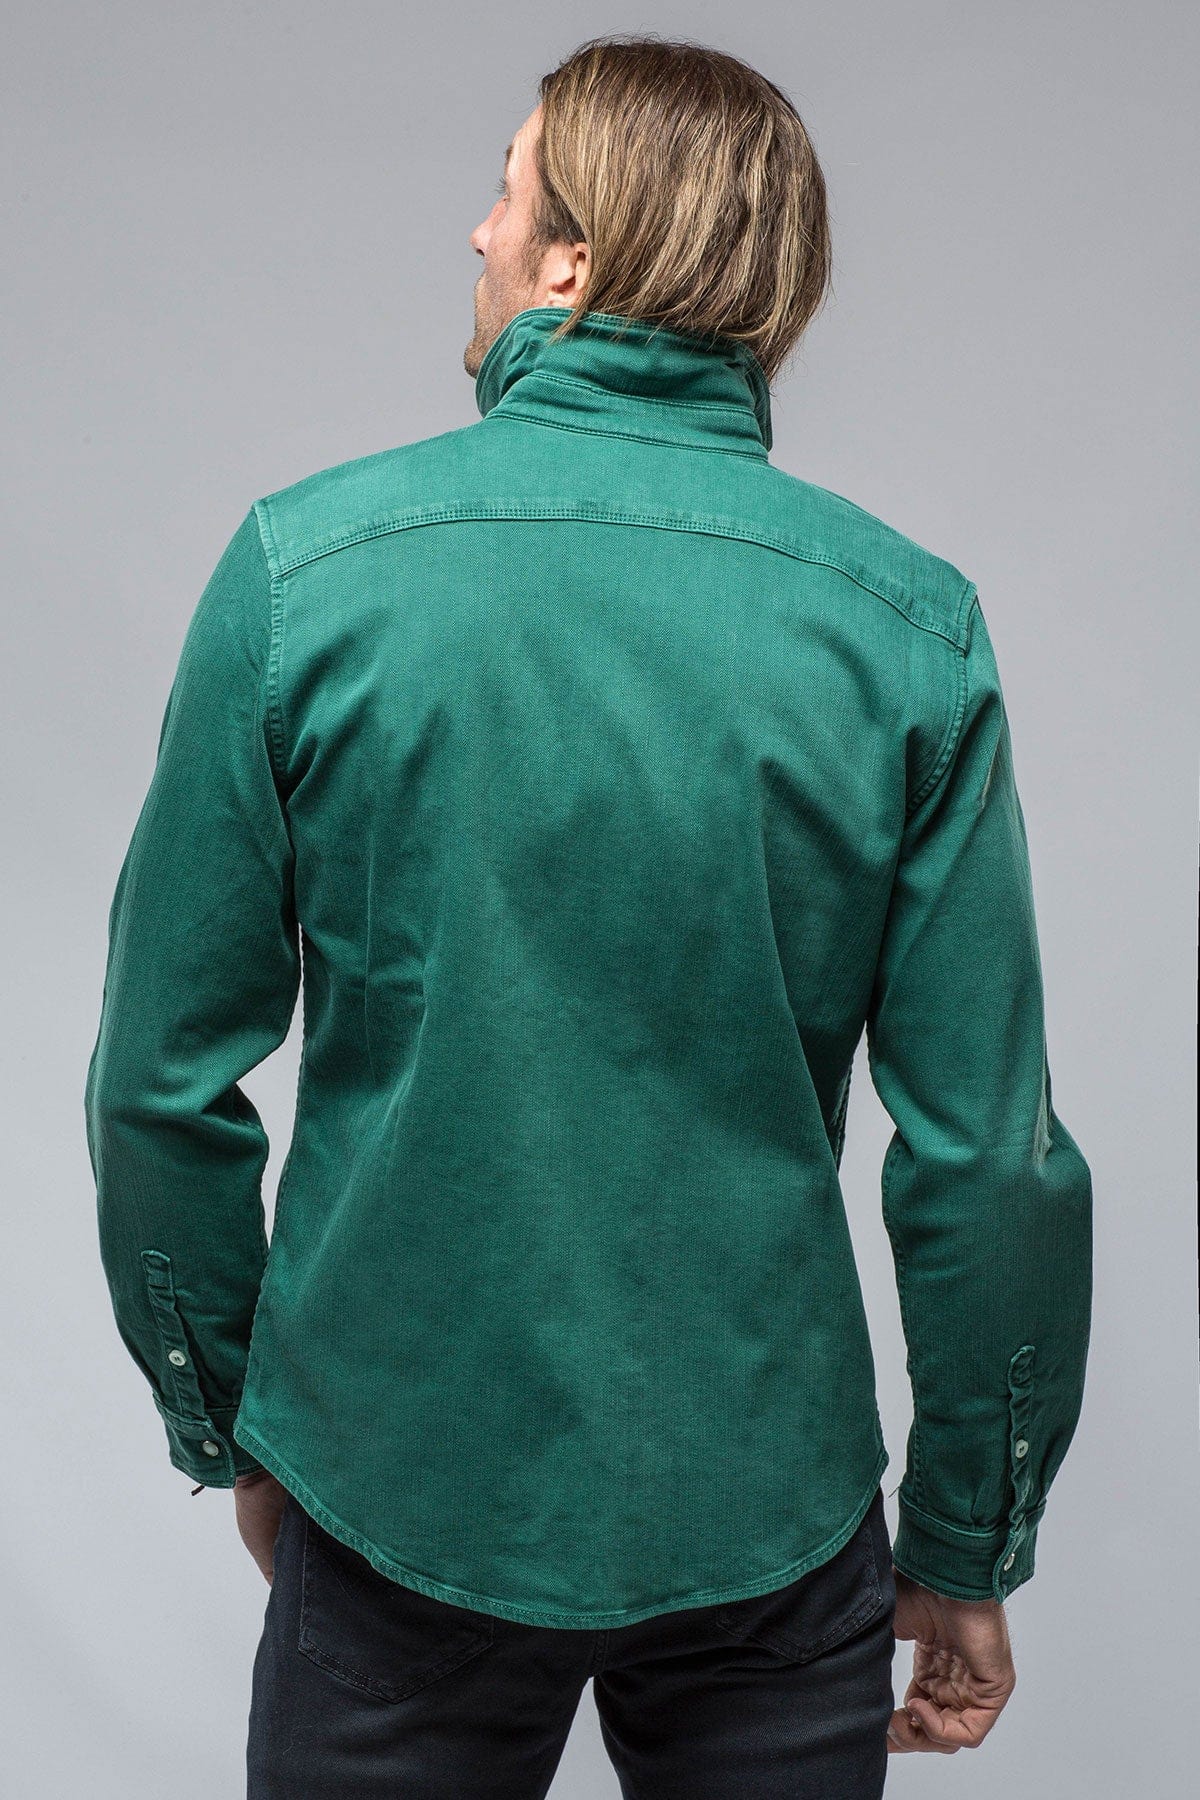 Ranger Colored Denim Snap Shirt In Green - AXEL'S